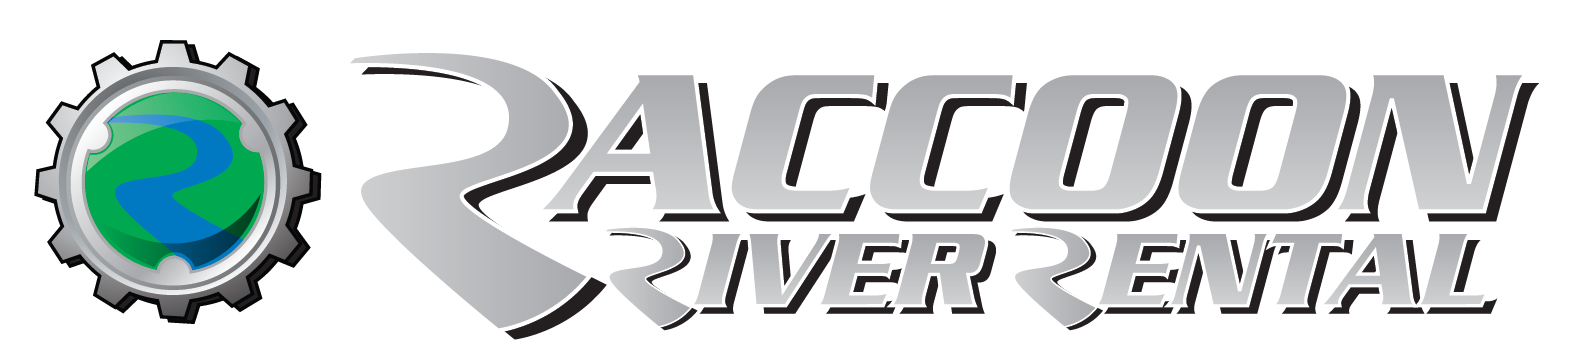 Raccoon River Rental